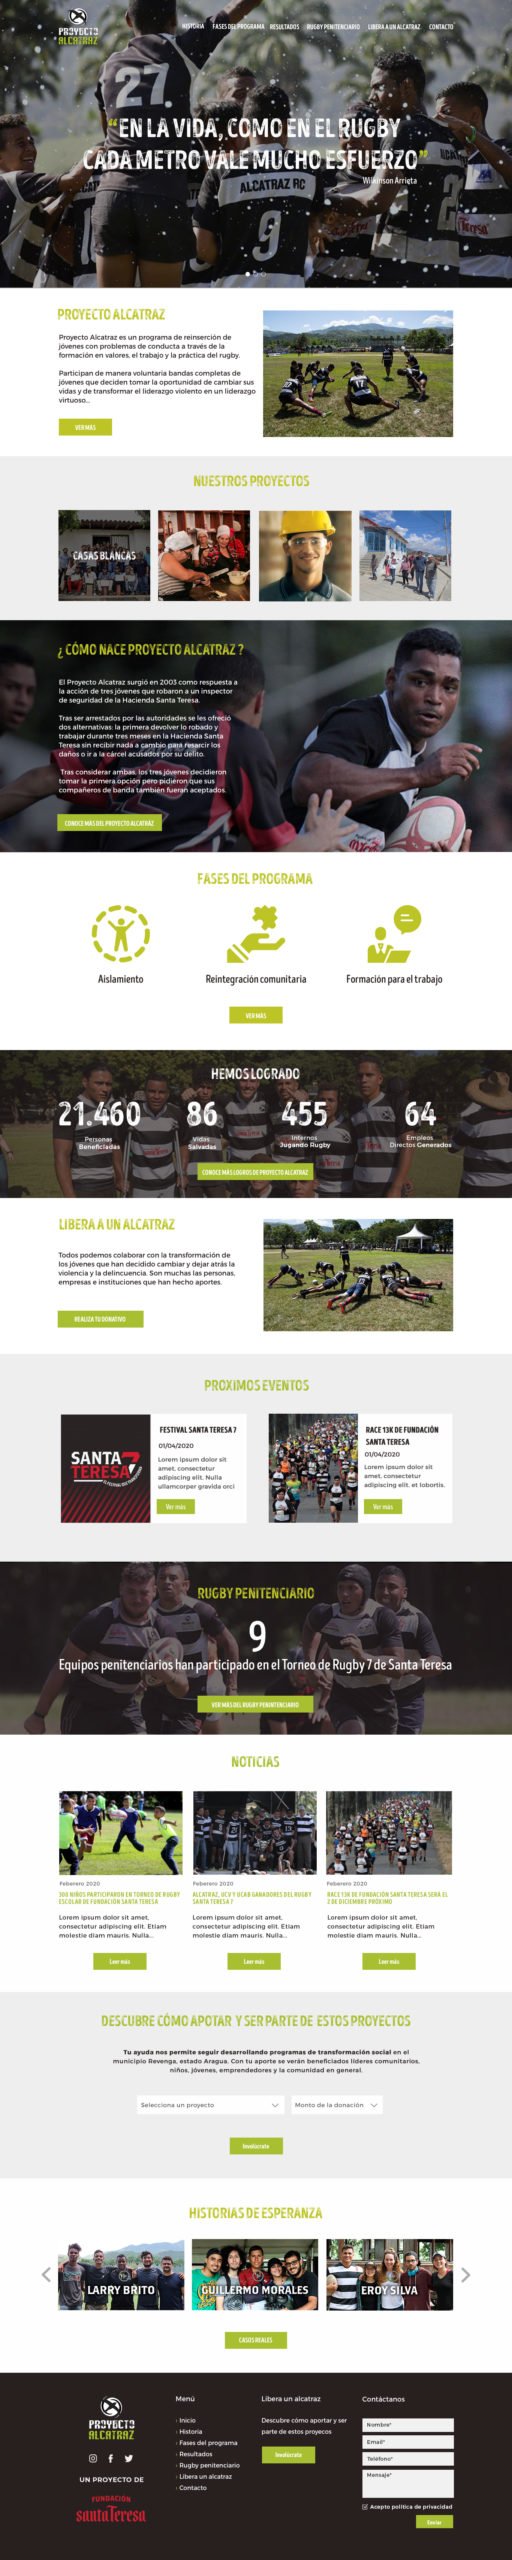 Diseño web rugby